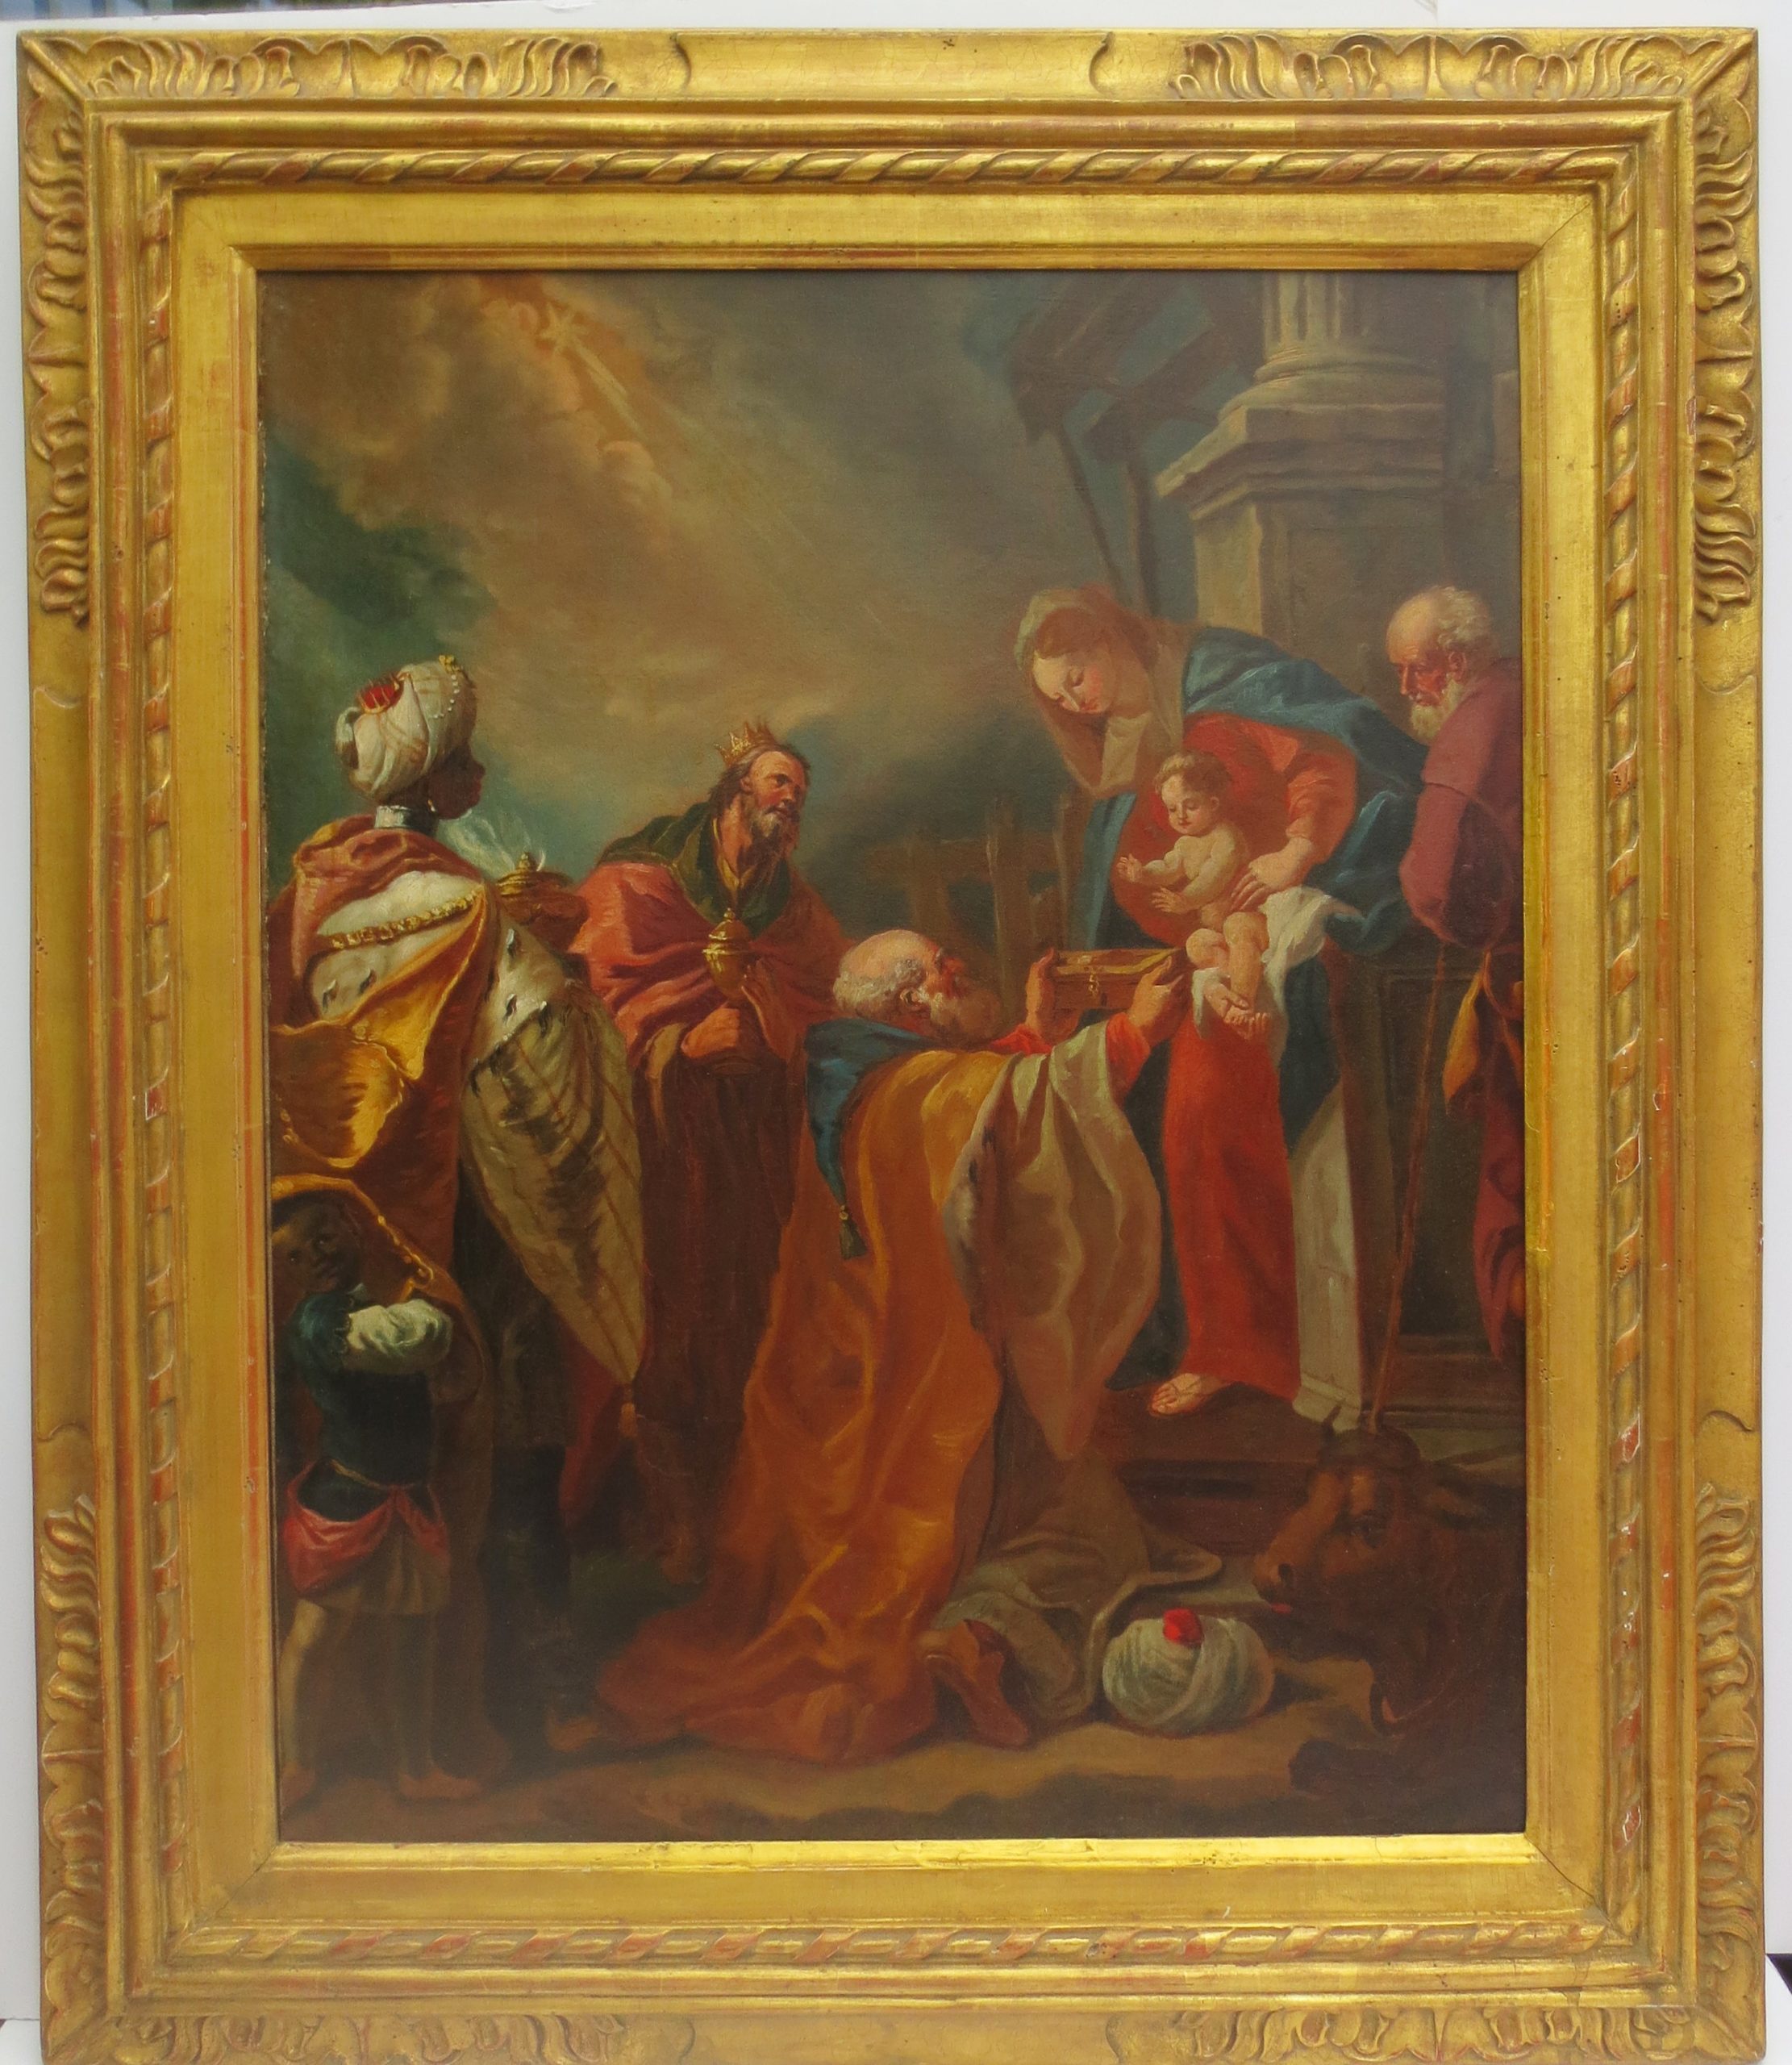 Adoration of the Magi, Giambattista Pittoni and Studio